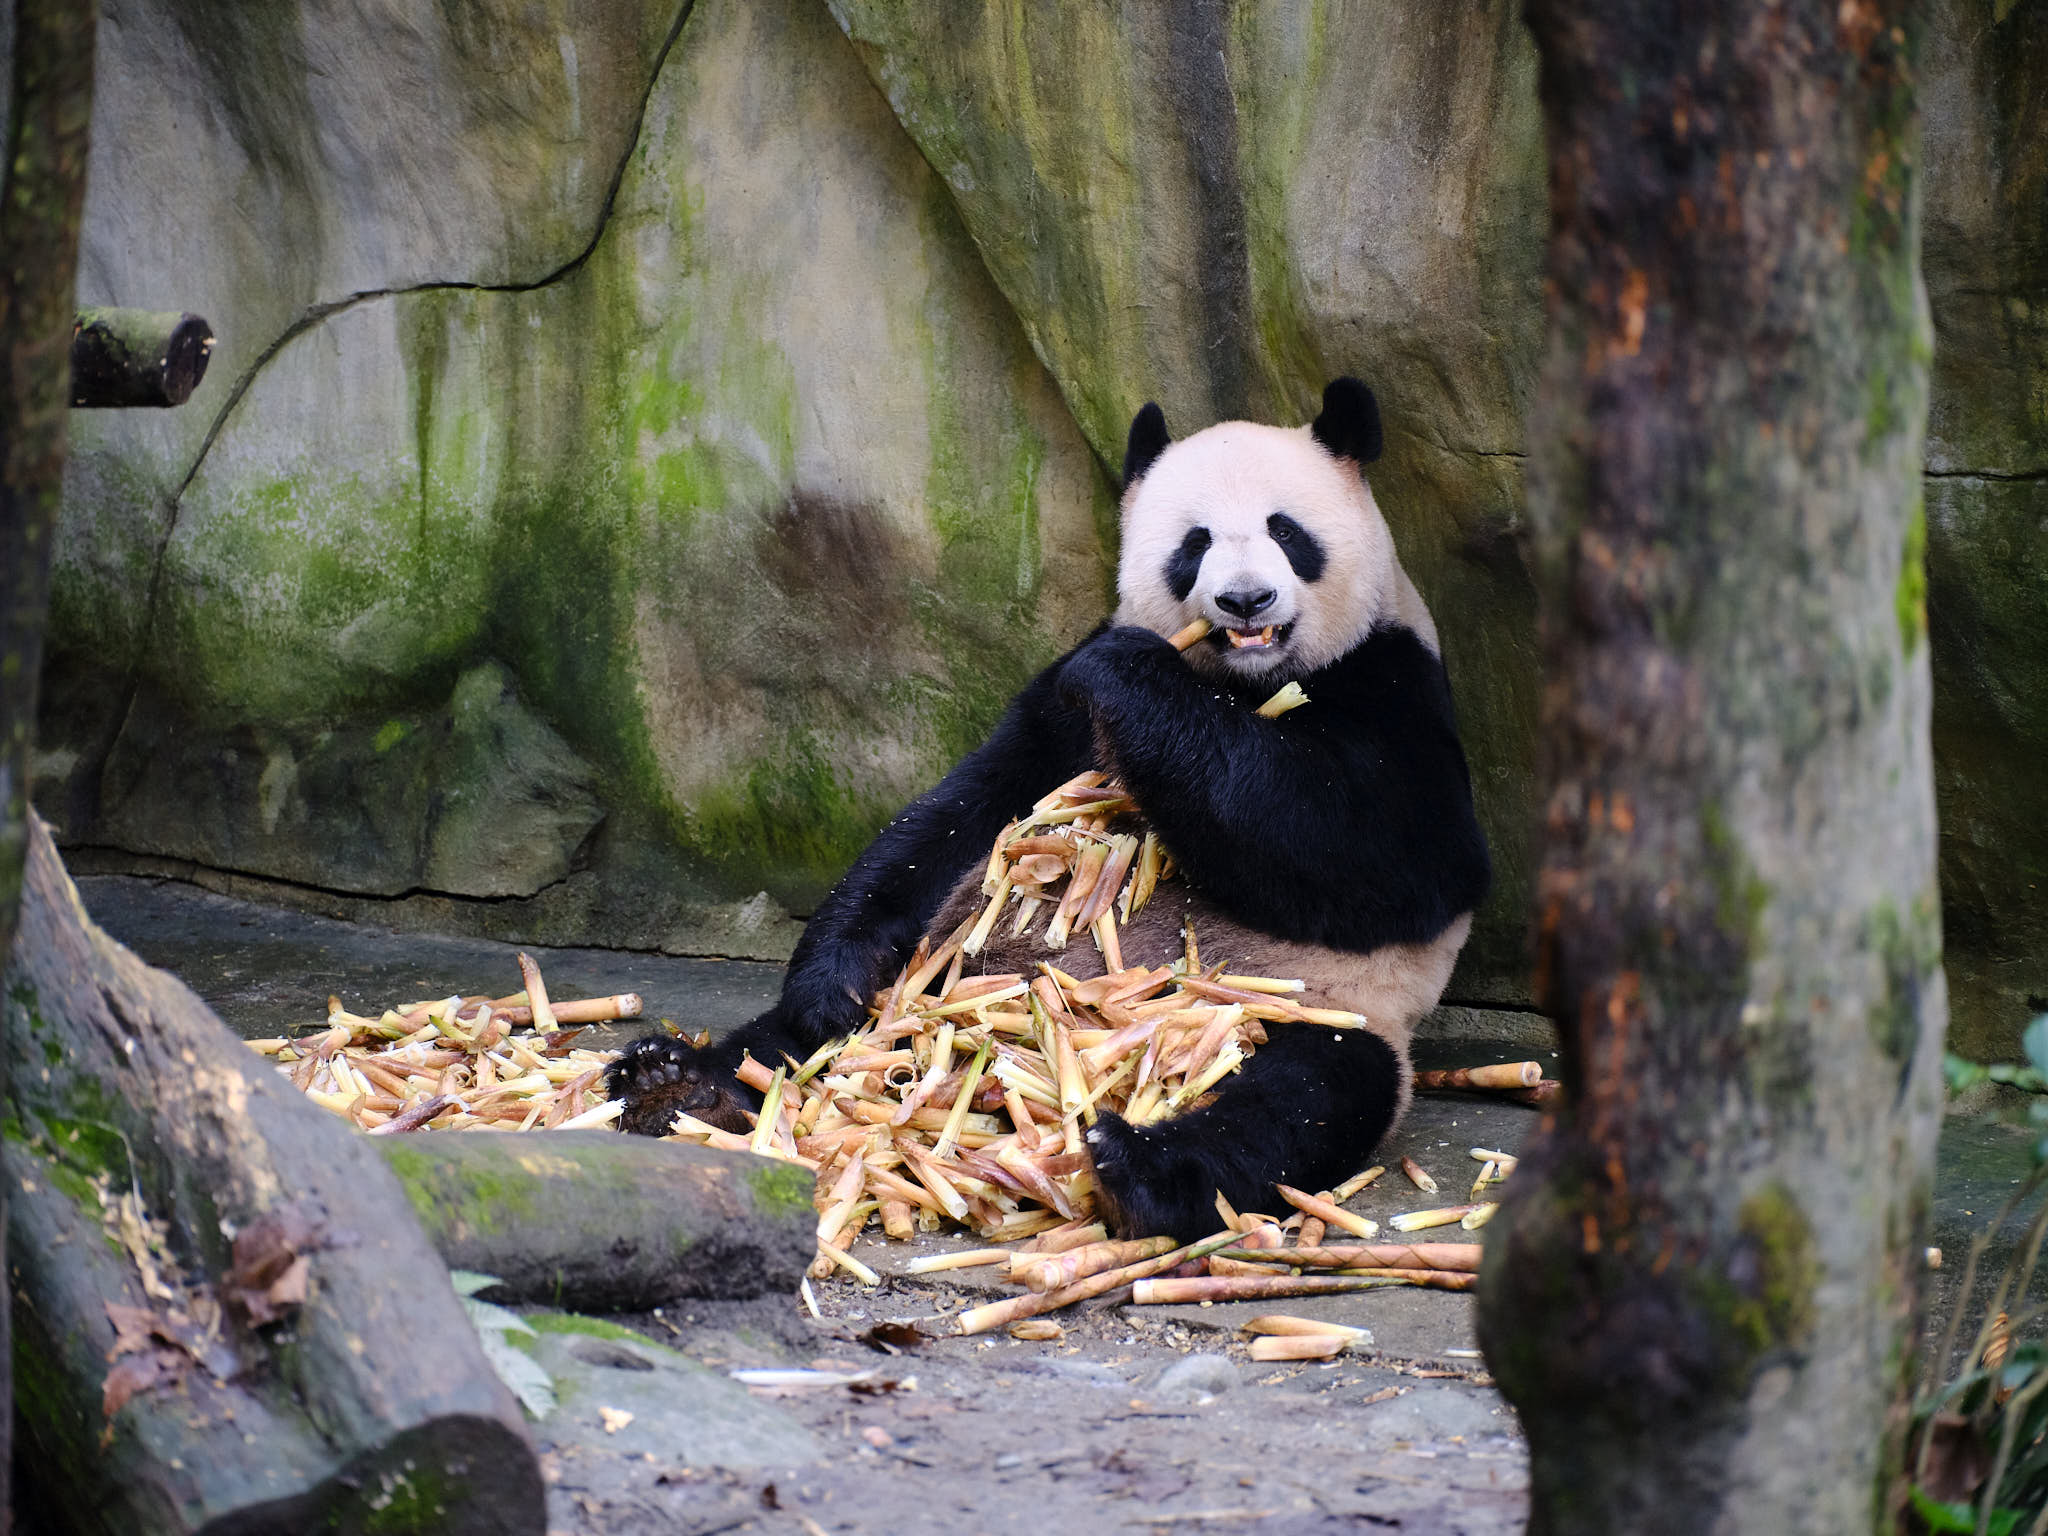 Panda eating bamboo at Chengdu Giant Panda Research Centre